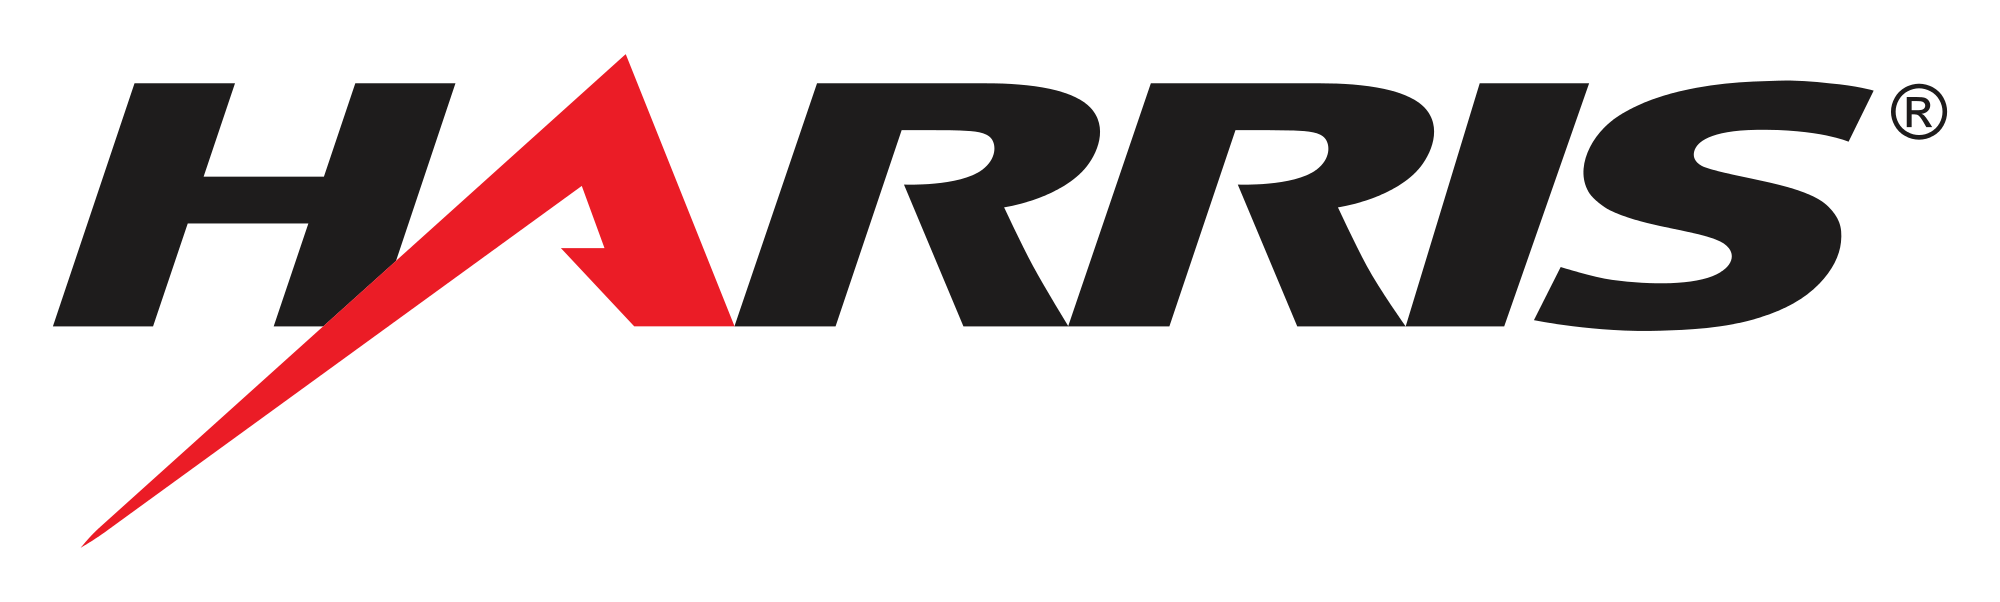 Harris Corporation Logo